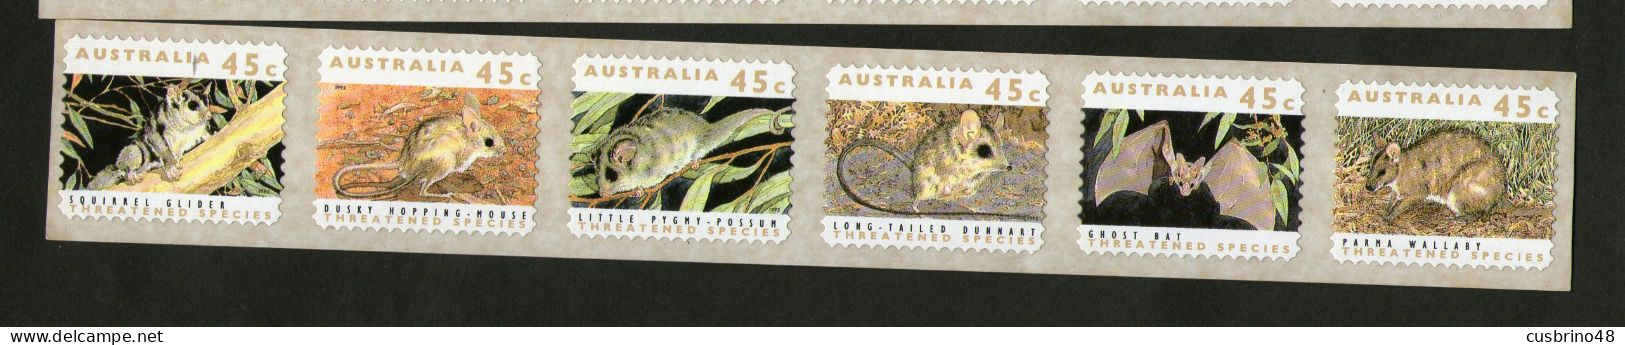 AUSTRALIA 1992 P & S Strip 45c Endangered Species Strip 6 PRINTSET 1 Koala Reprint. - Lot  AUS 236 - Ungebraucht